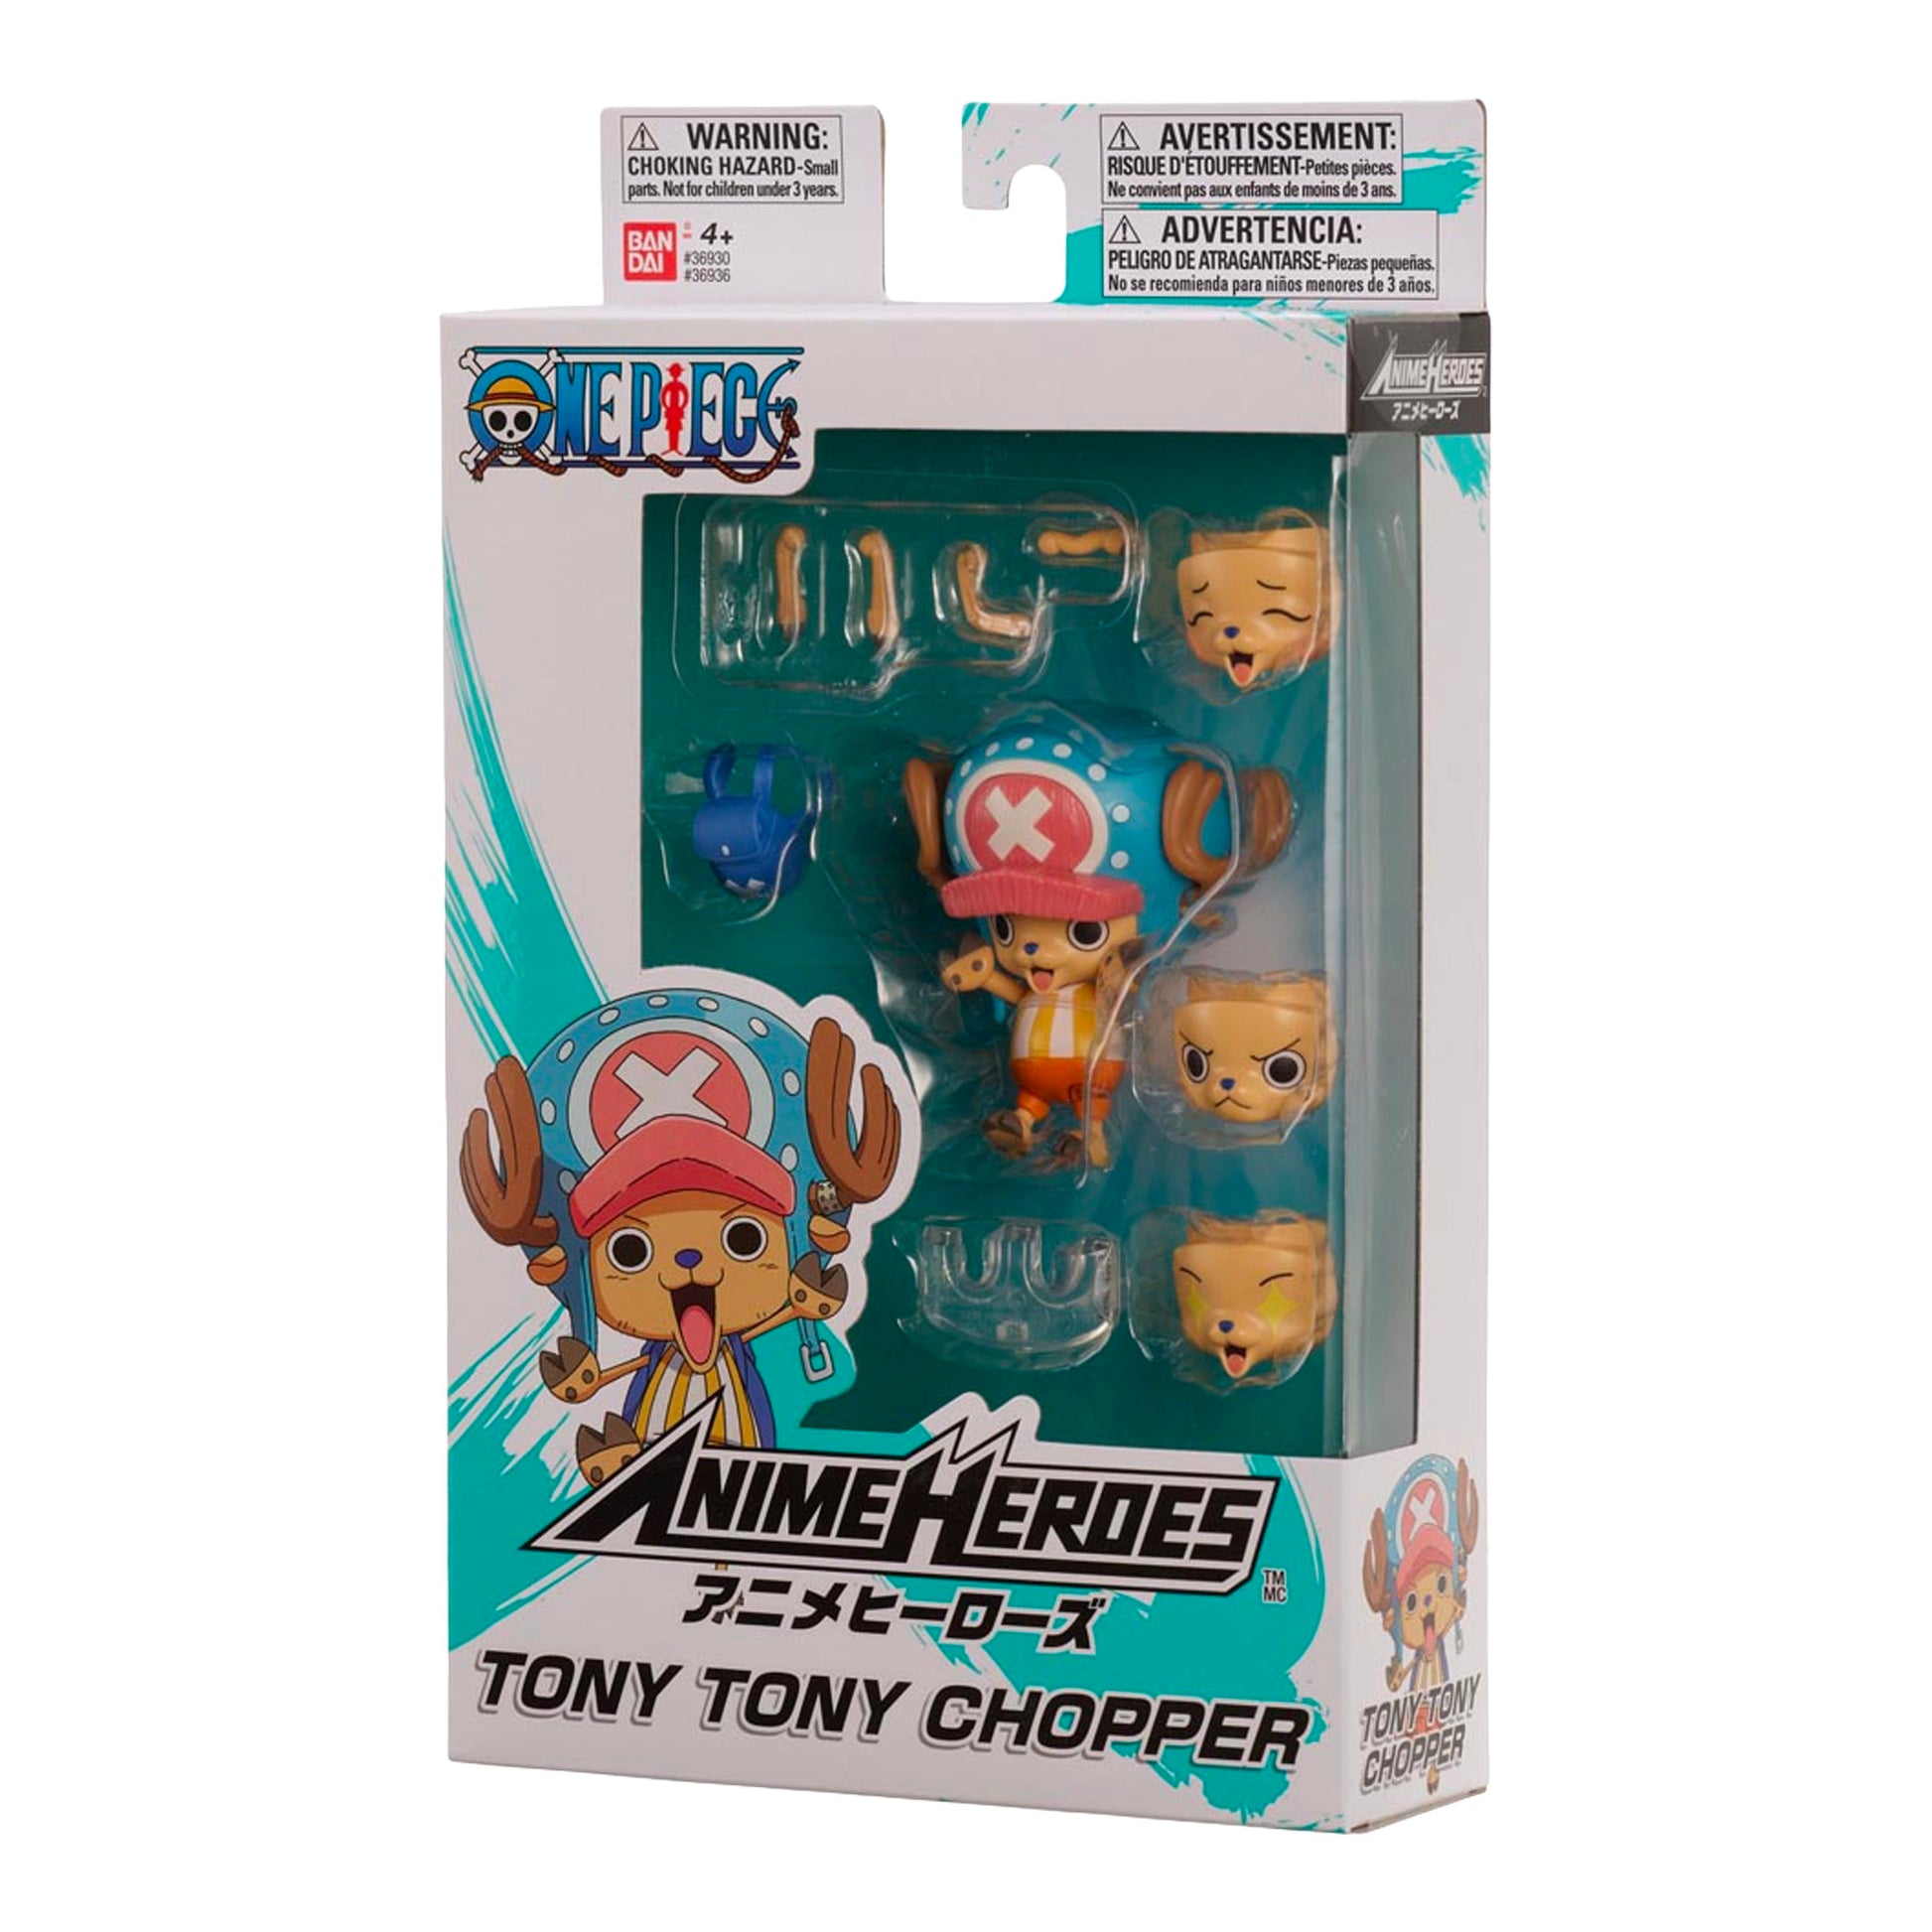 ANIME HEROES - One Piece - Tony Tony Chopper Action Figure